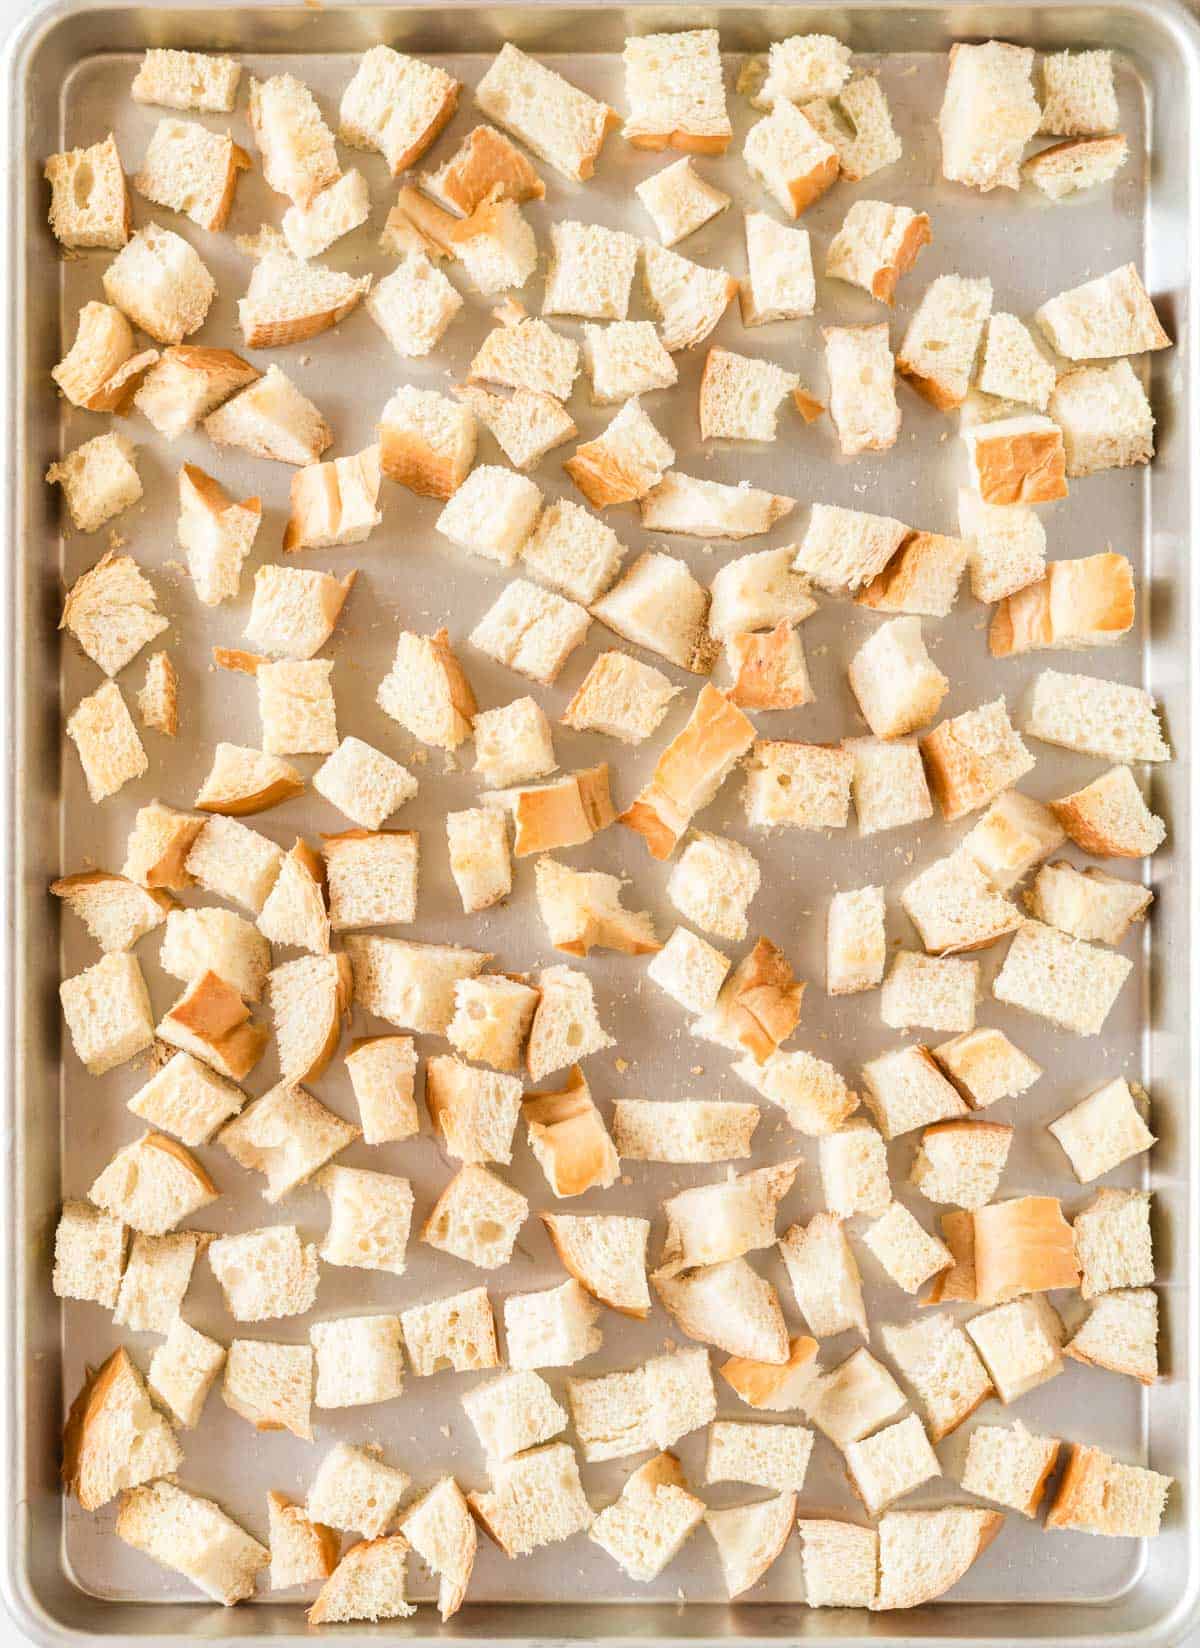 bread cubes on a baking sheet